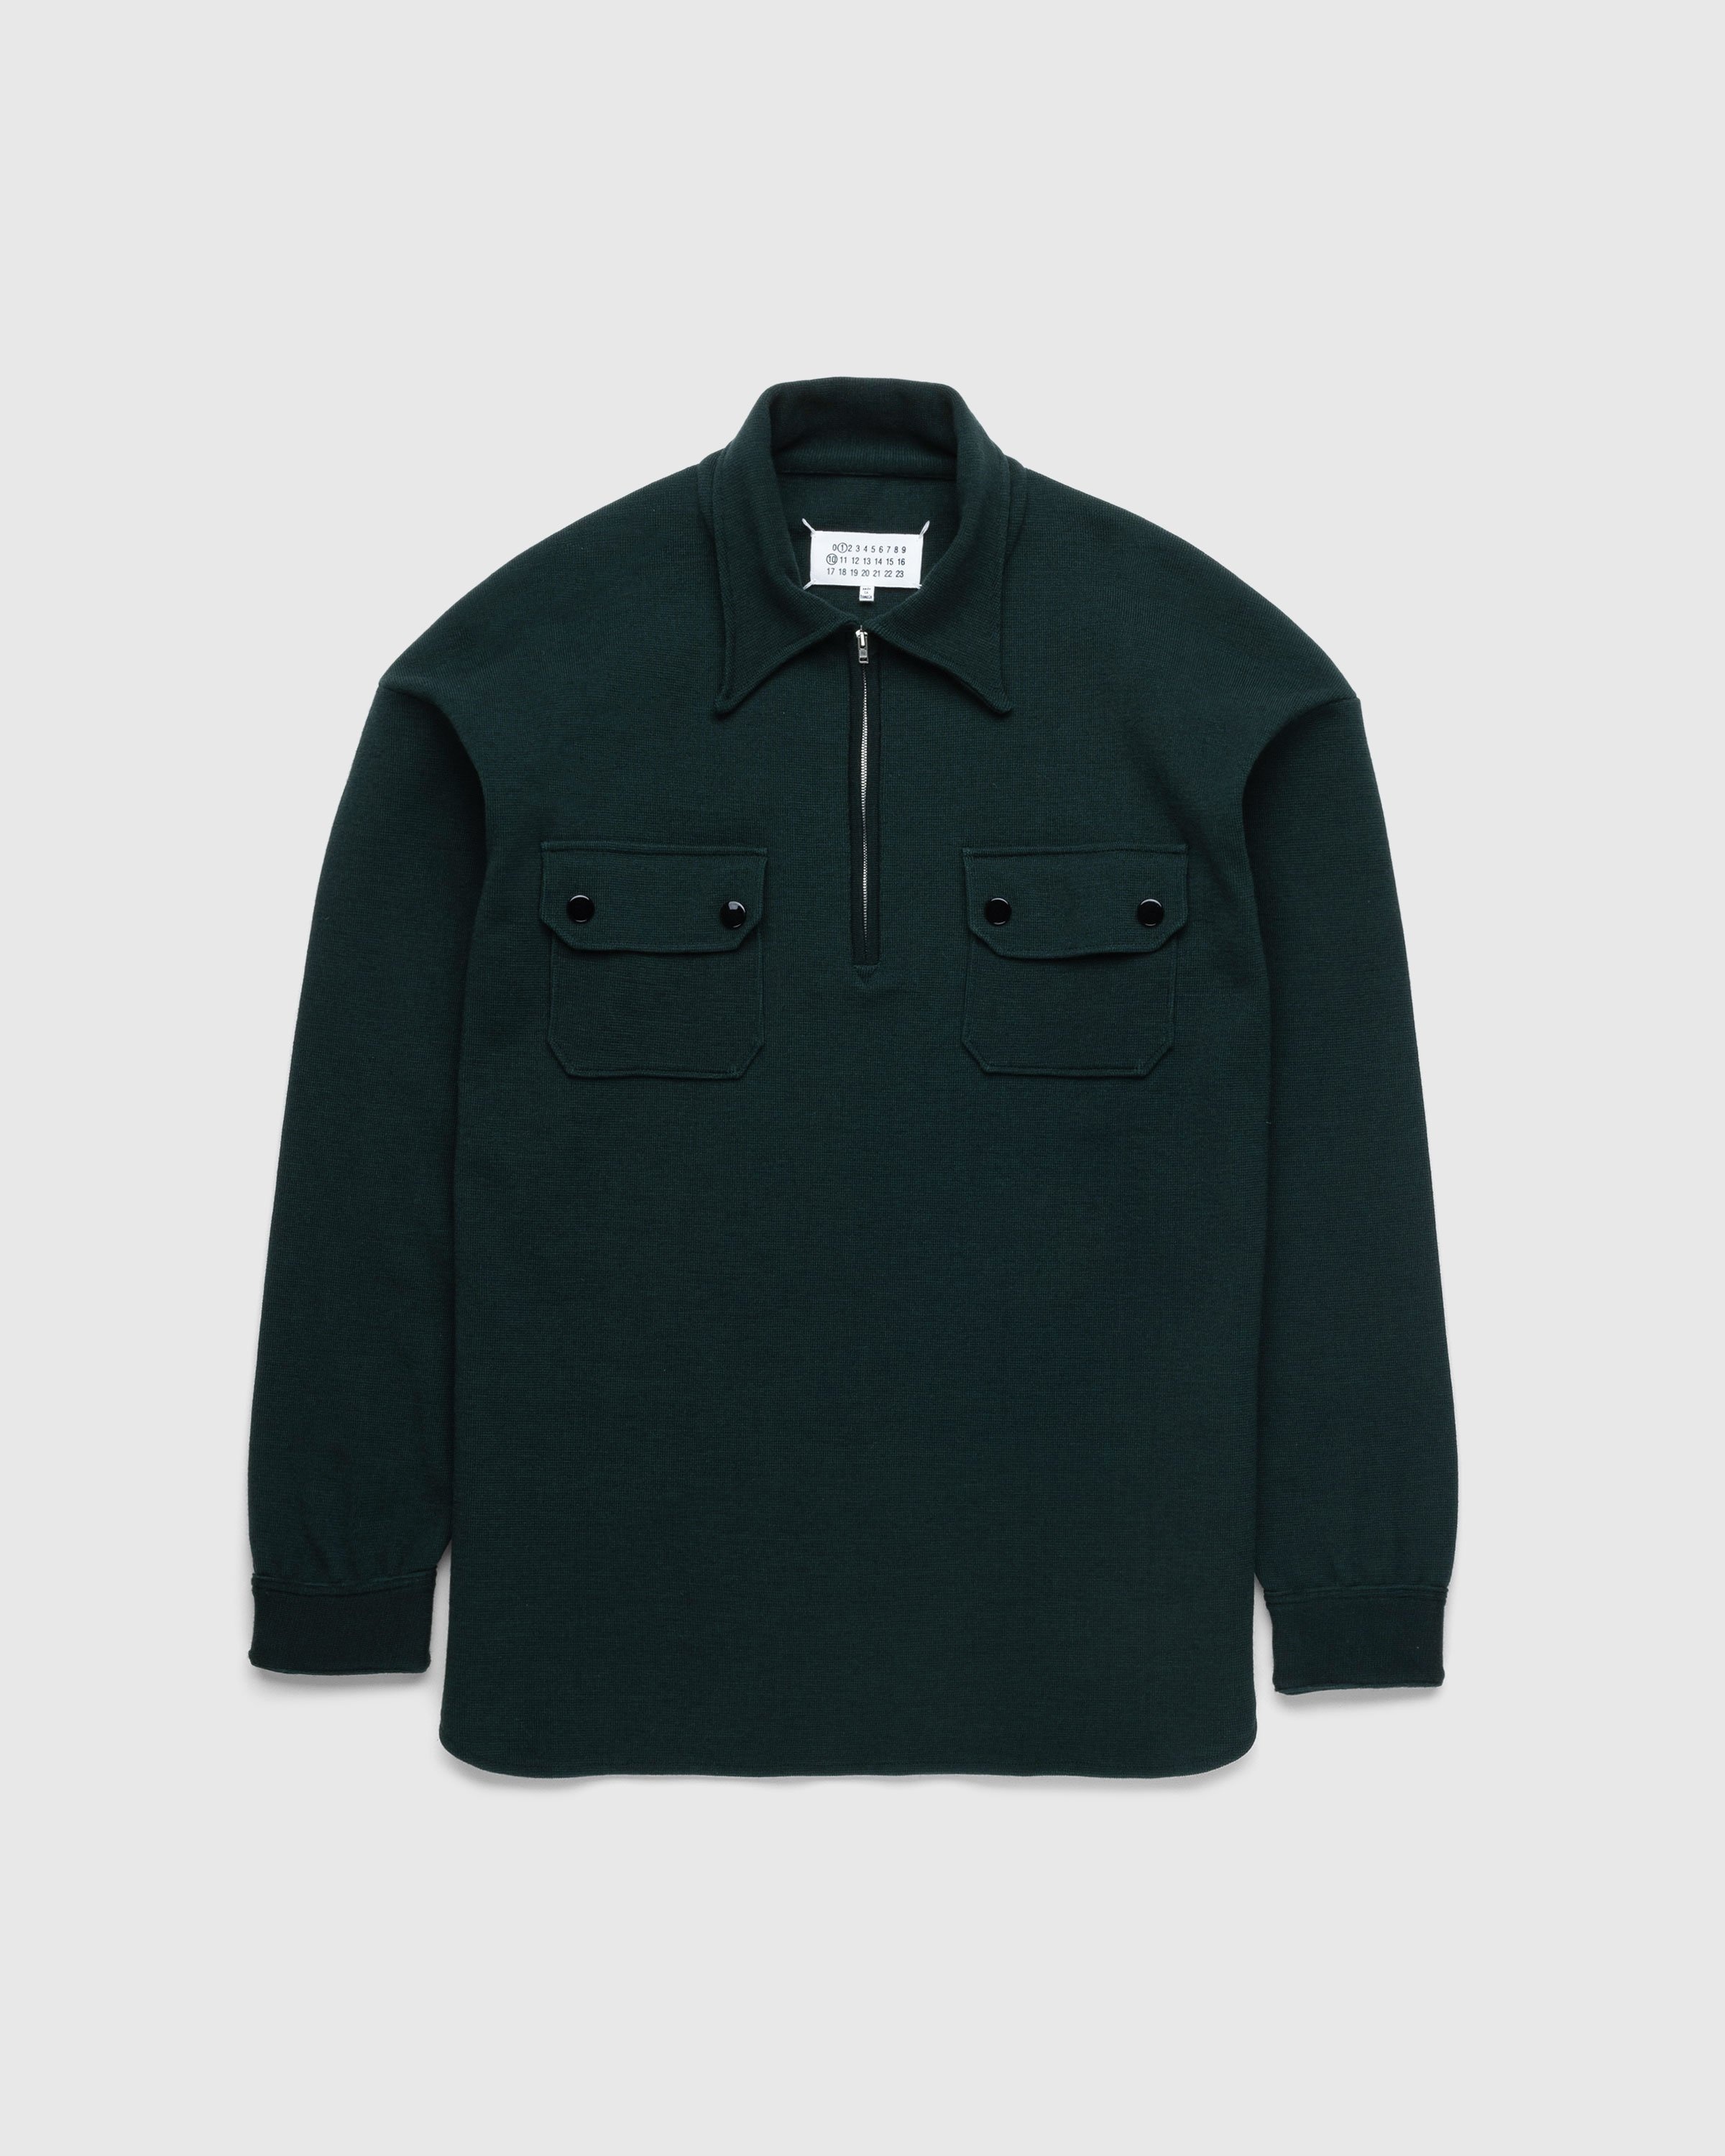 Maison Margiela – Longsleeve Polo Shirt Green - Shirts - Green - Image 1